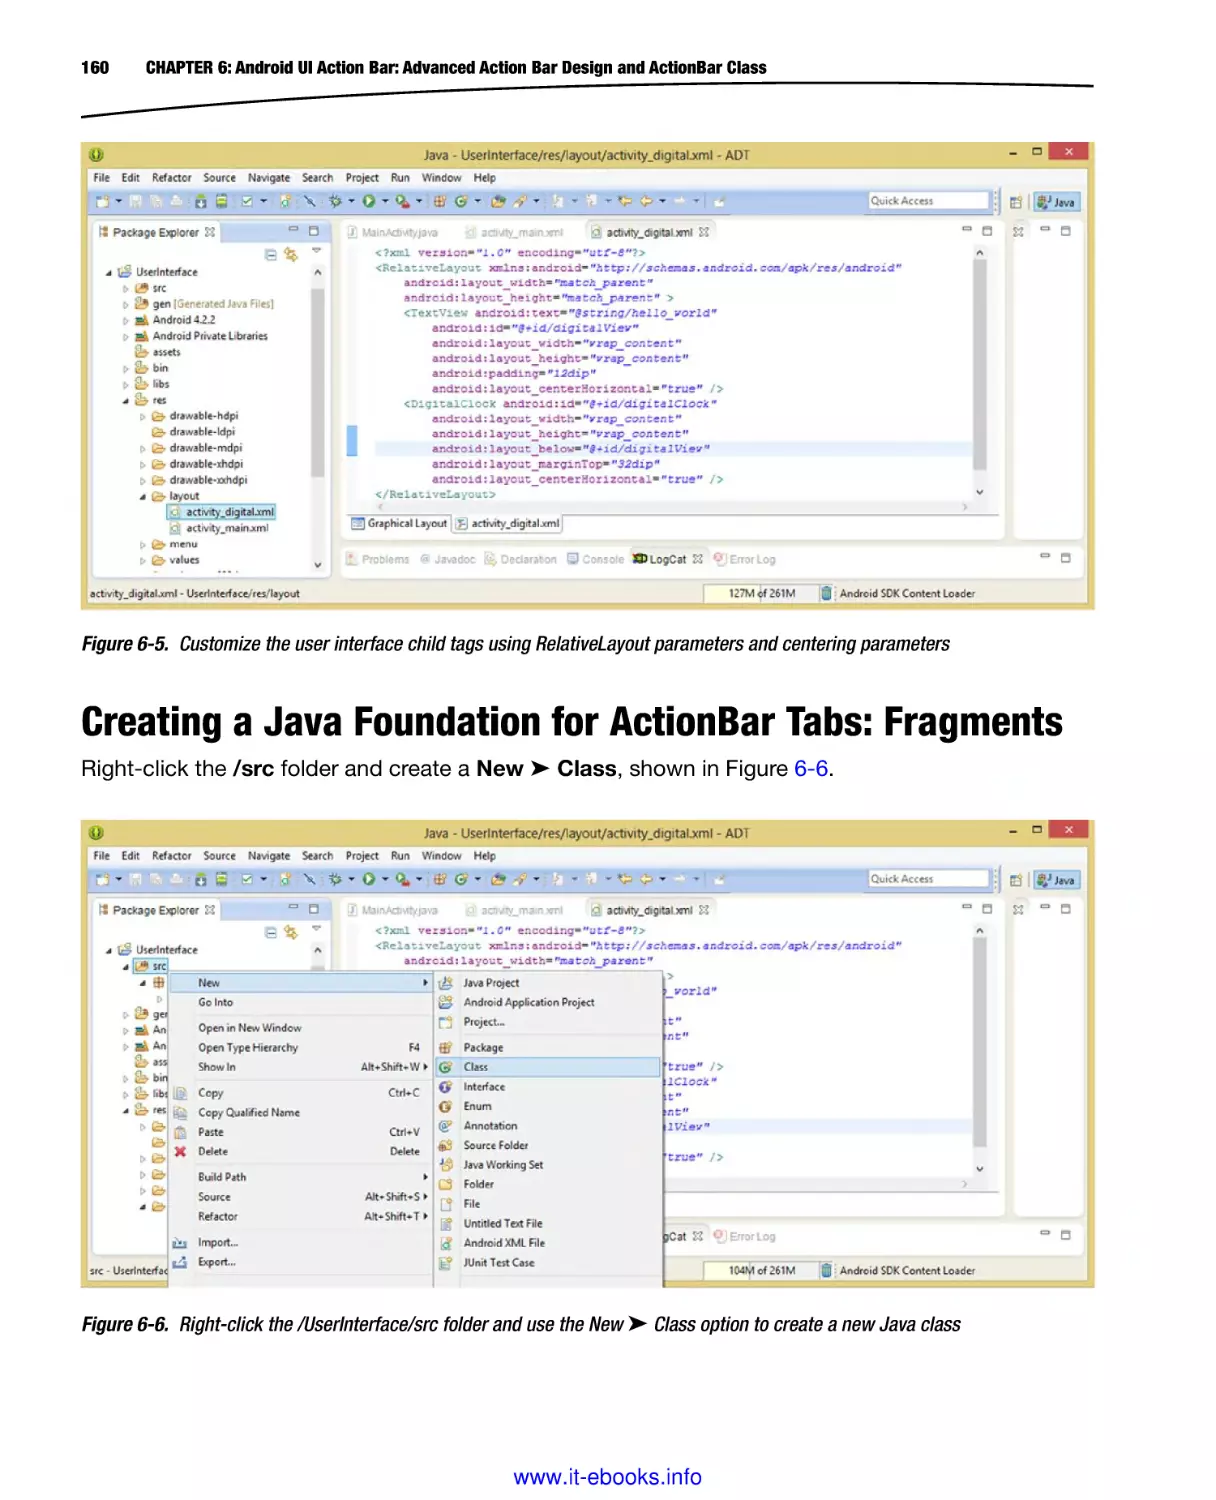 Creating a Java Foundation for ActionBar Tabs